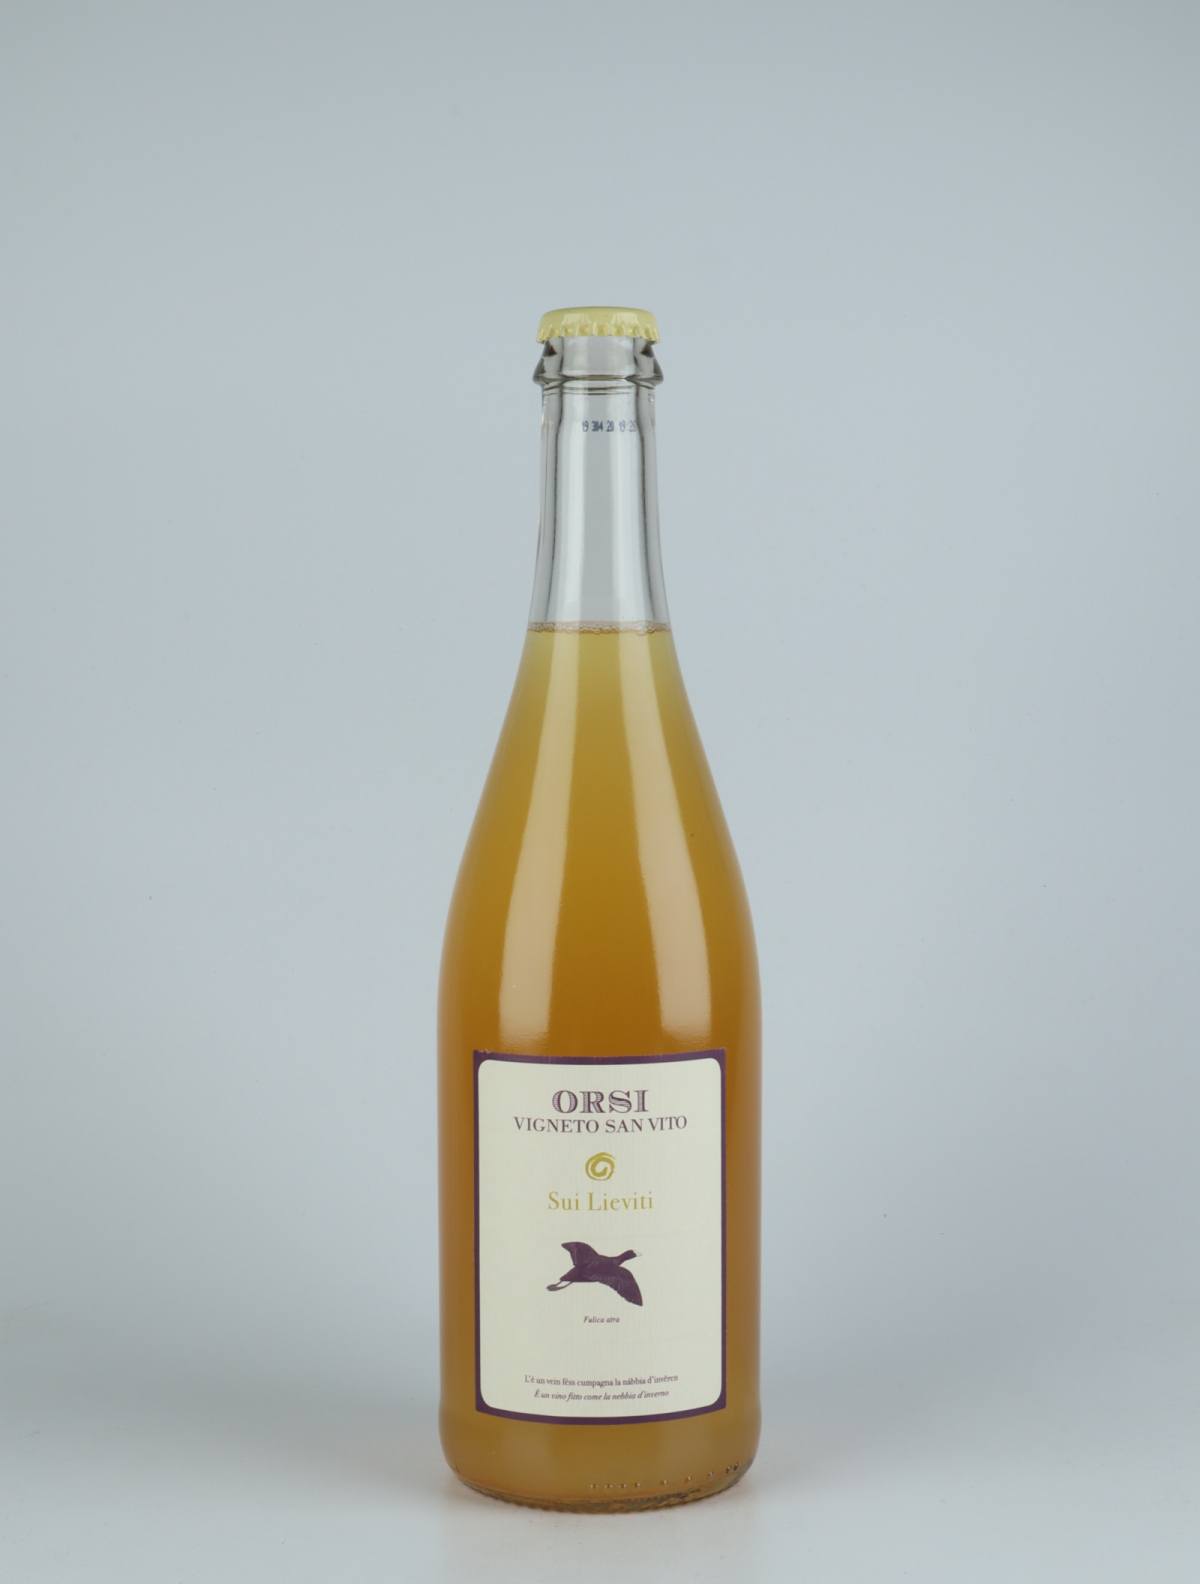 A bottle 2019 Sui Lieviti Sparkling from Orsi - San Vito, Emilia-Romagna in Italy